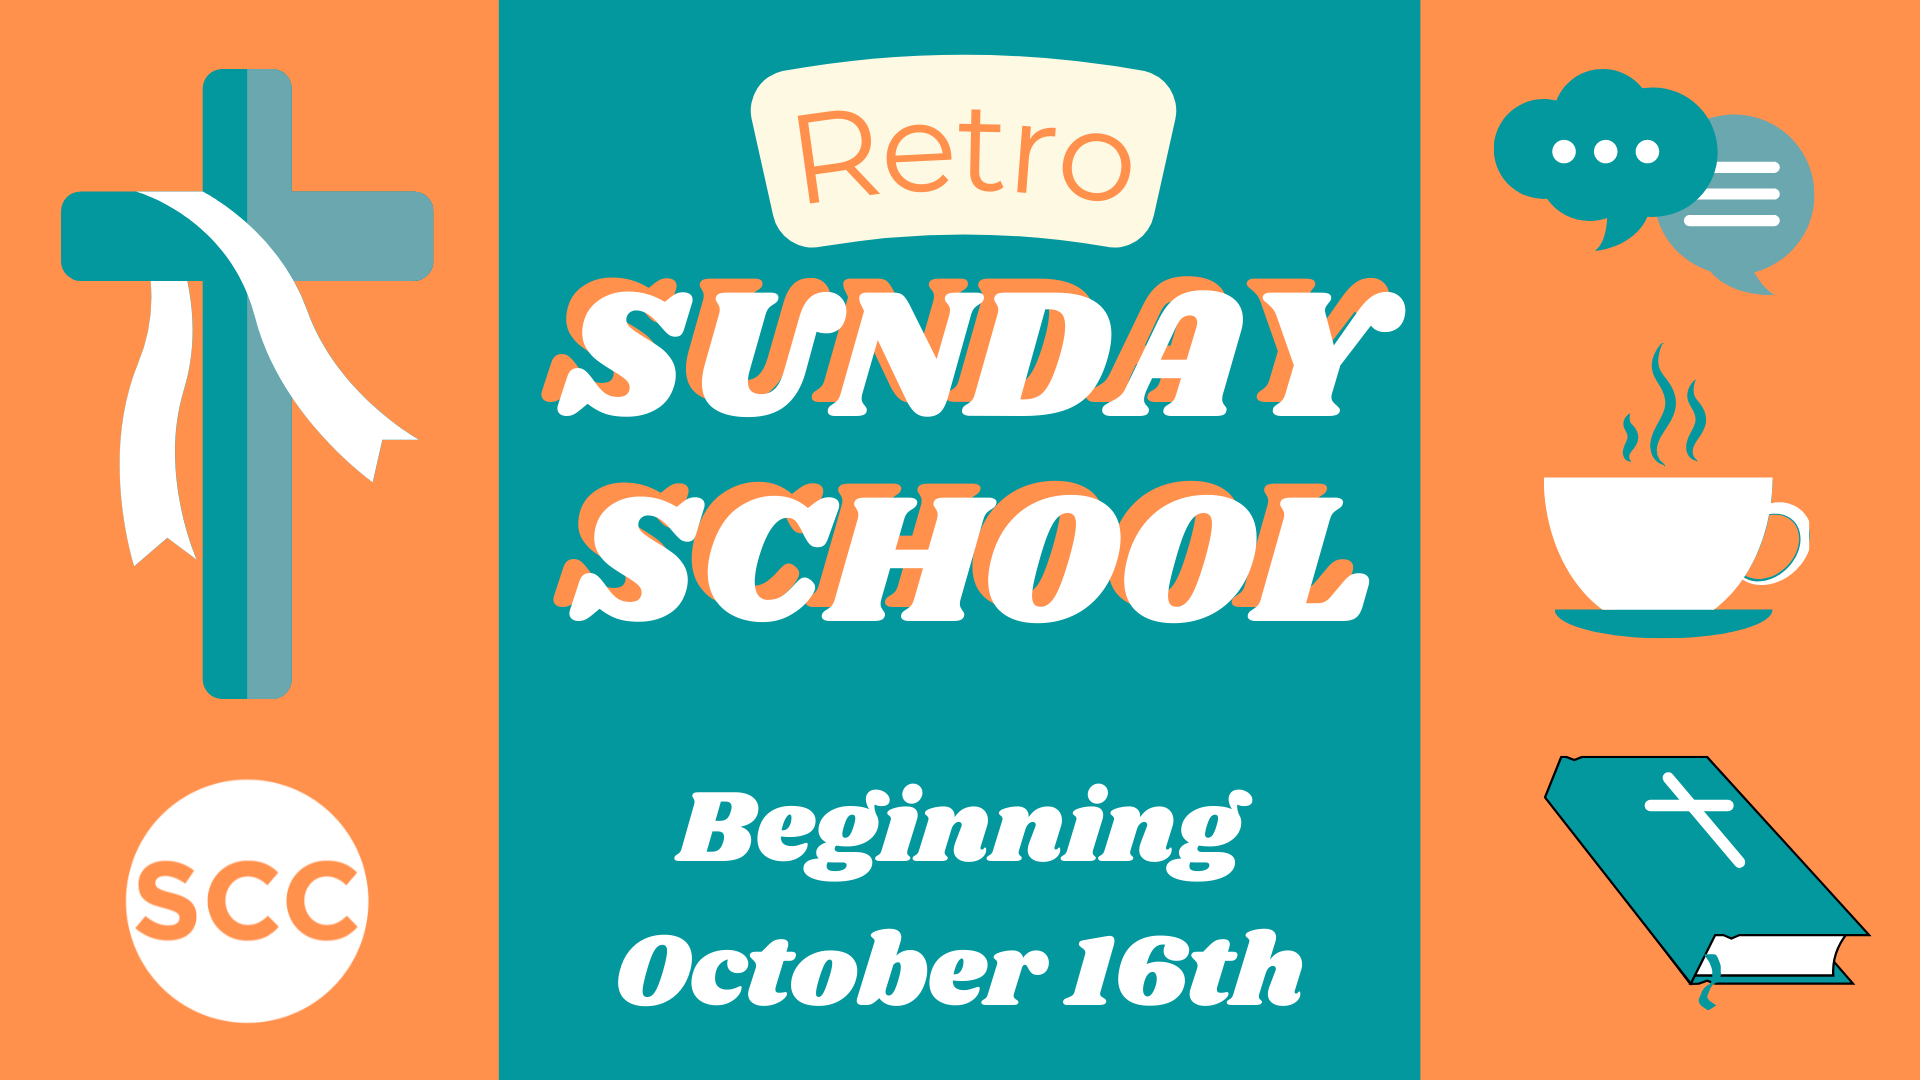 Retro Sunday School